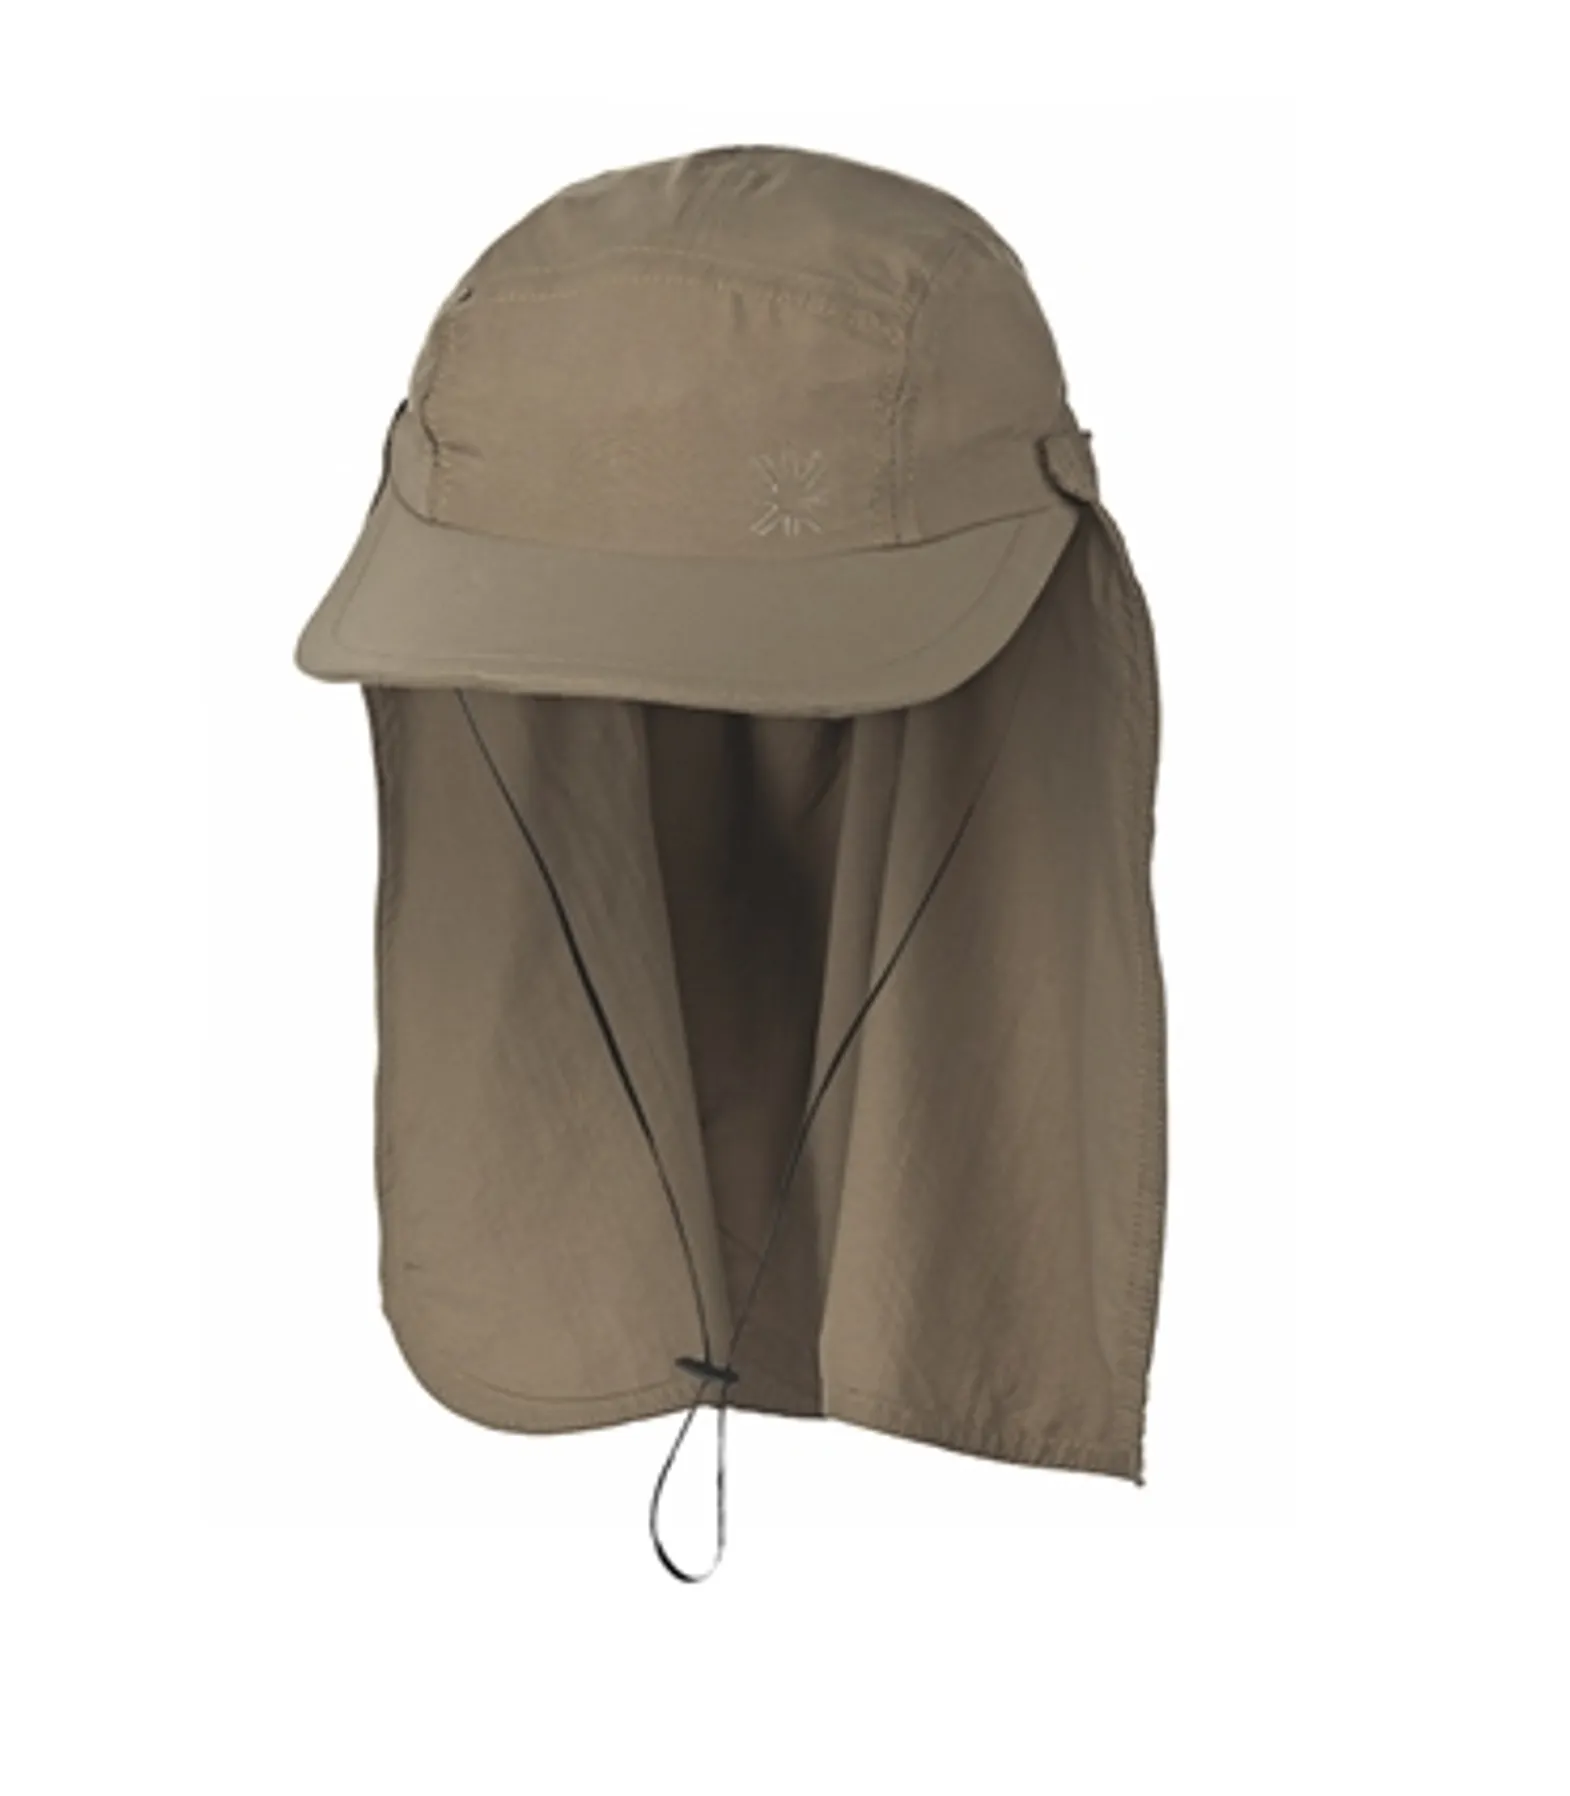 Khaki Cap With Neck Protection - Spf50 - Bone Legionario Kaki - Solar ...